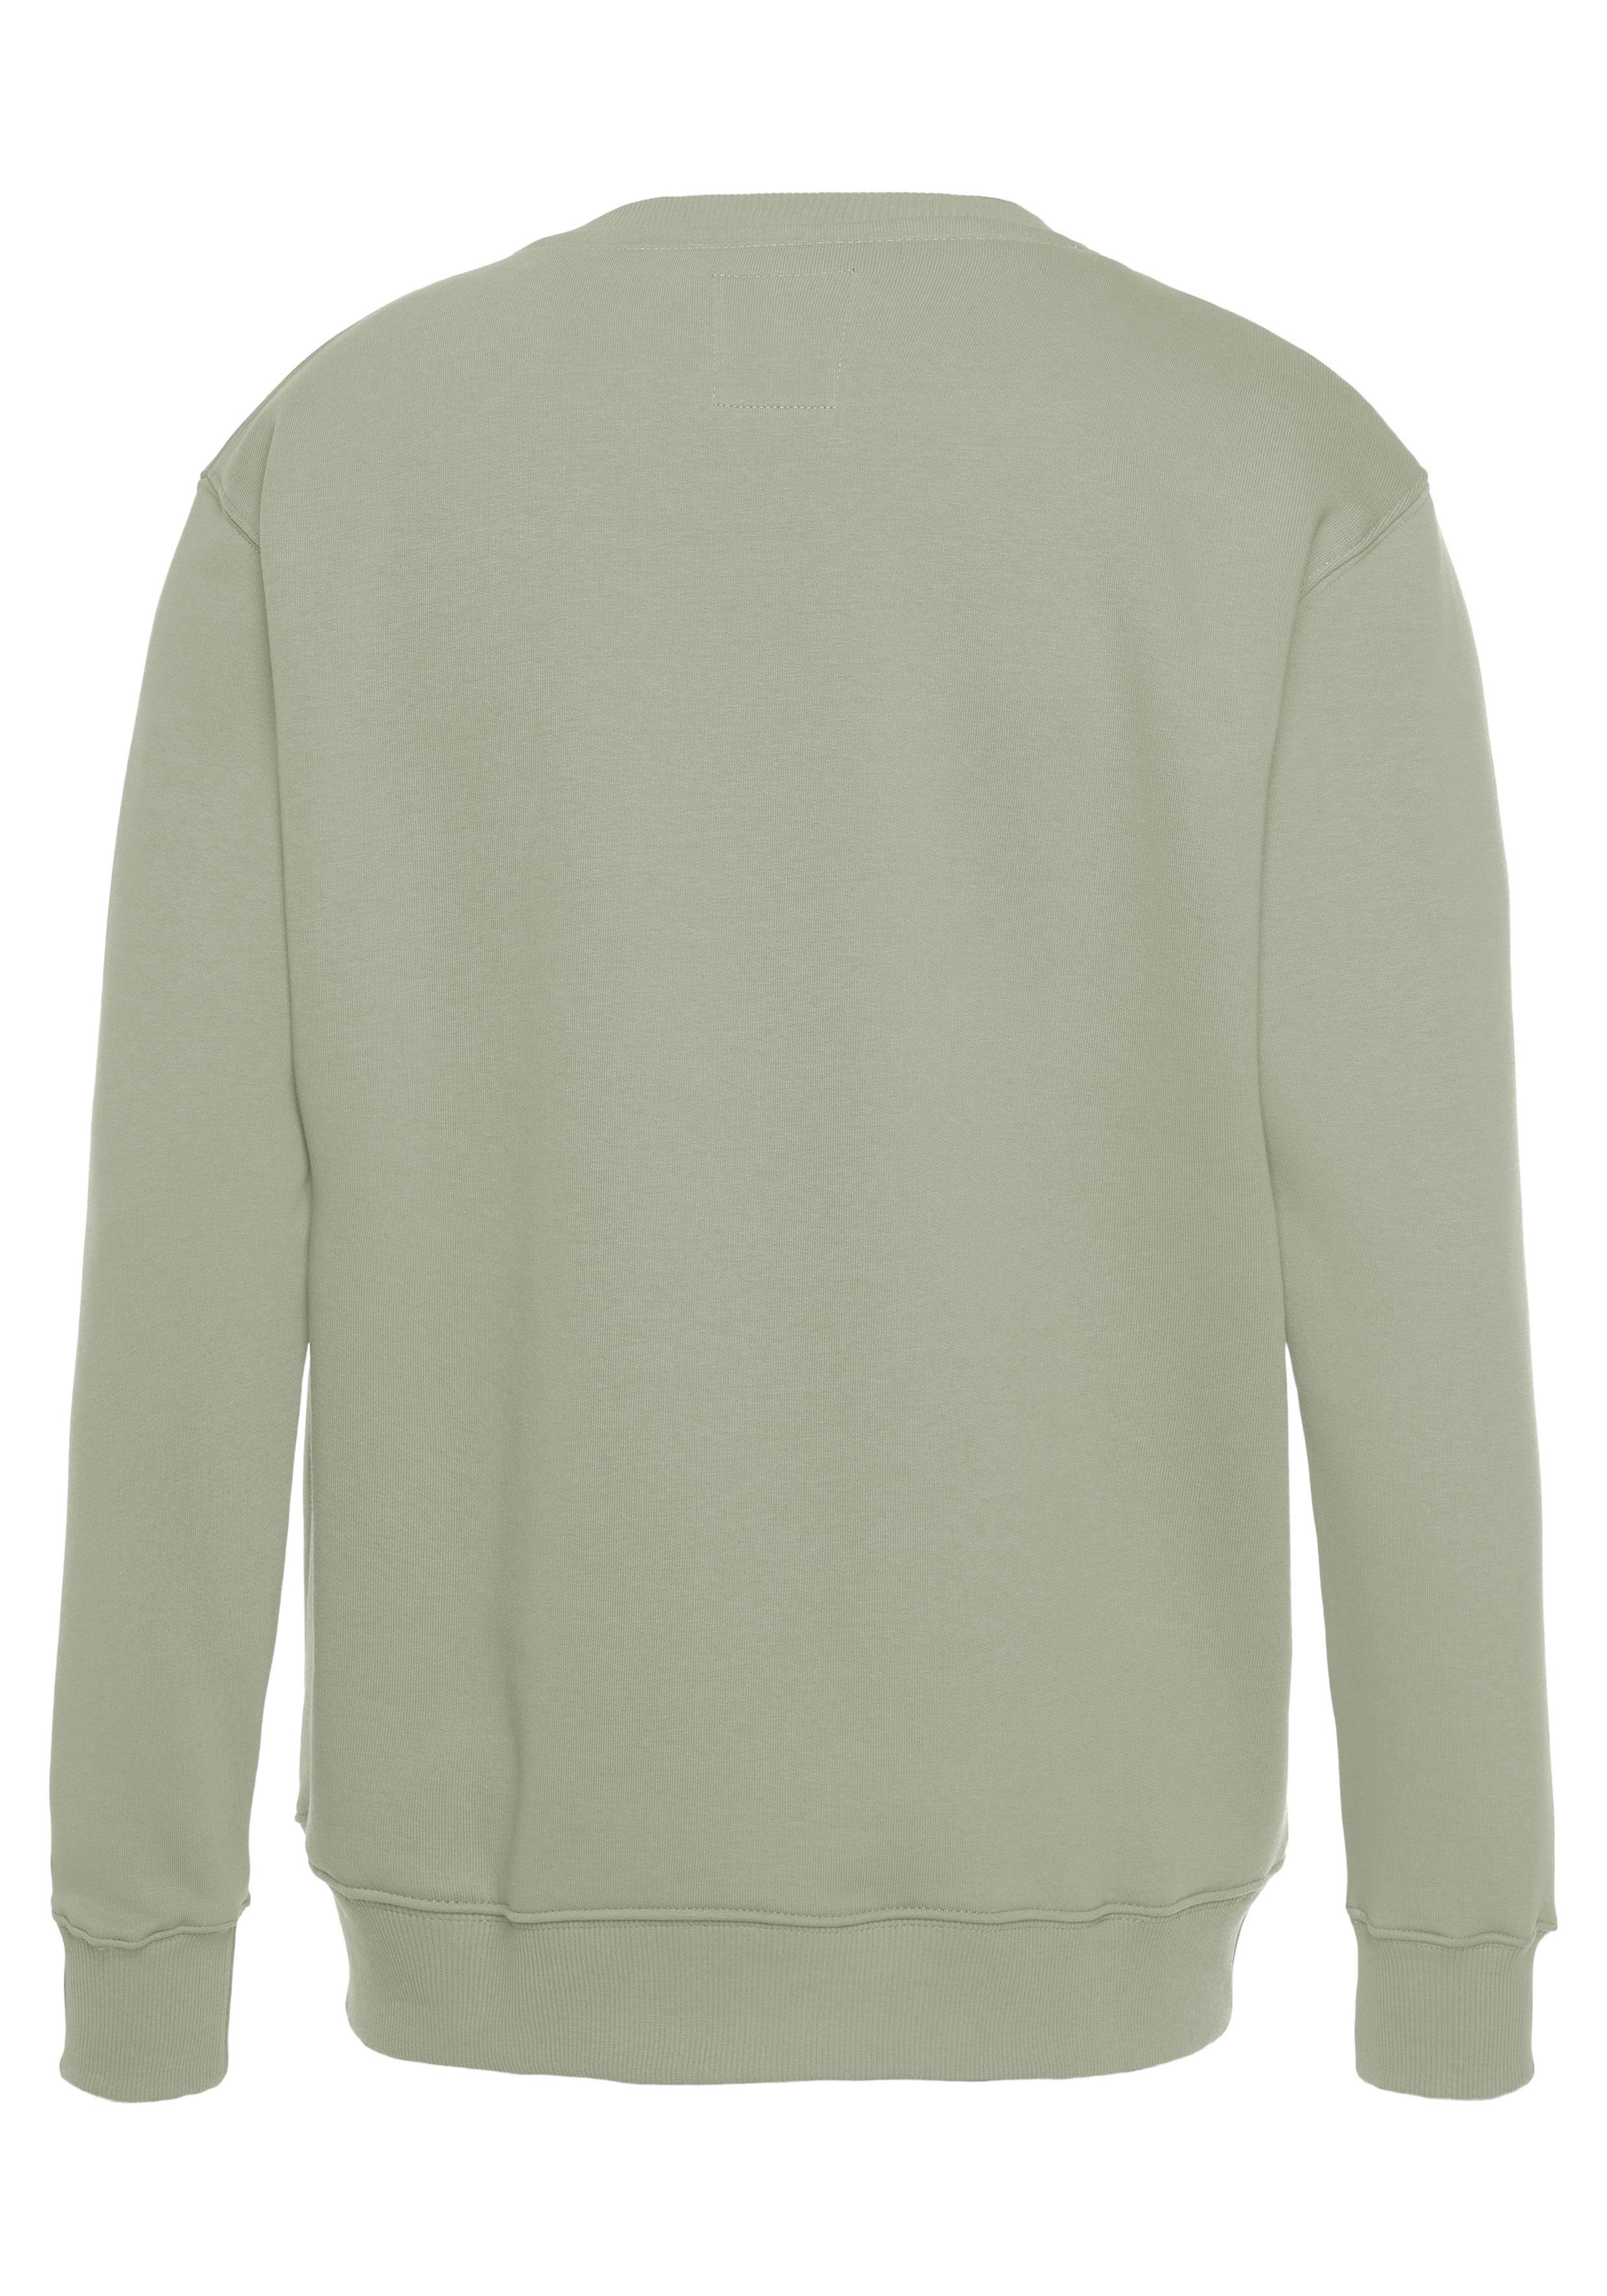 Industries Sweatshirt olive Basic Sweater Alpha